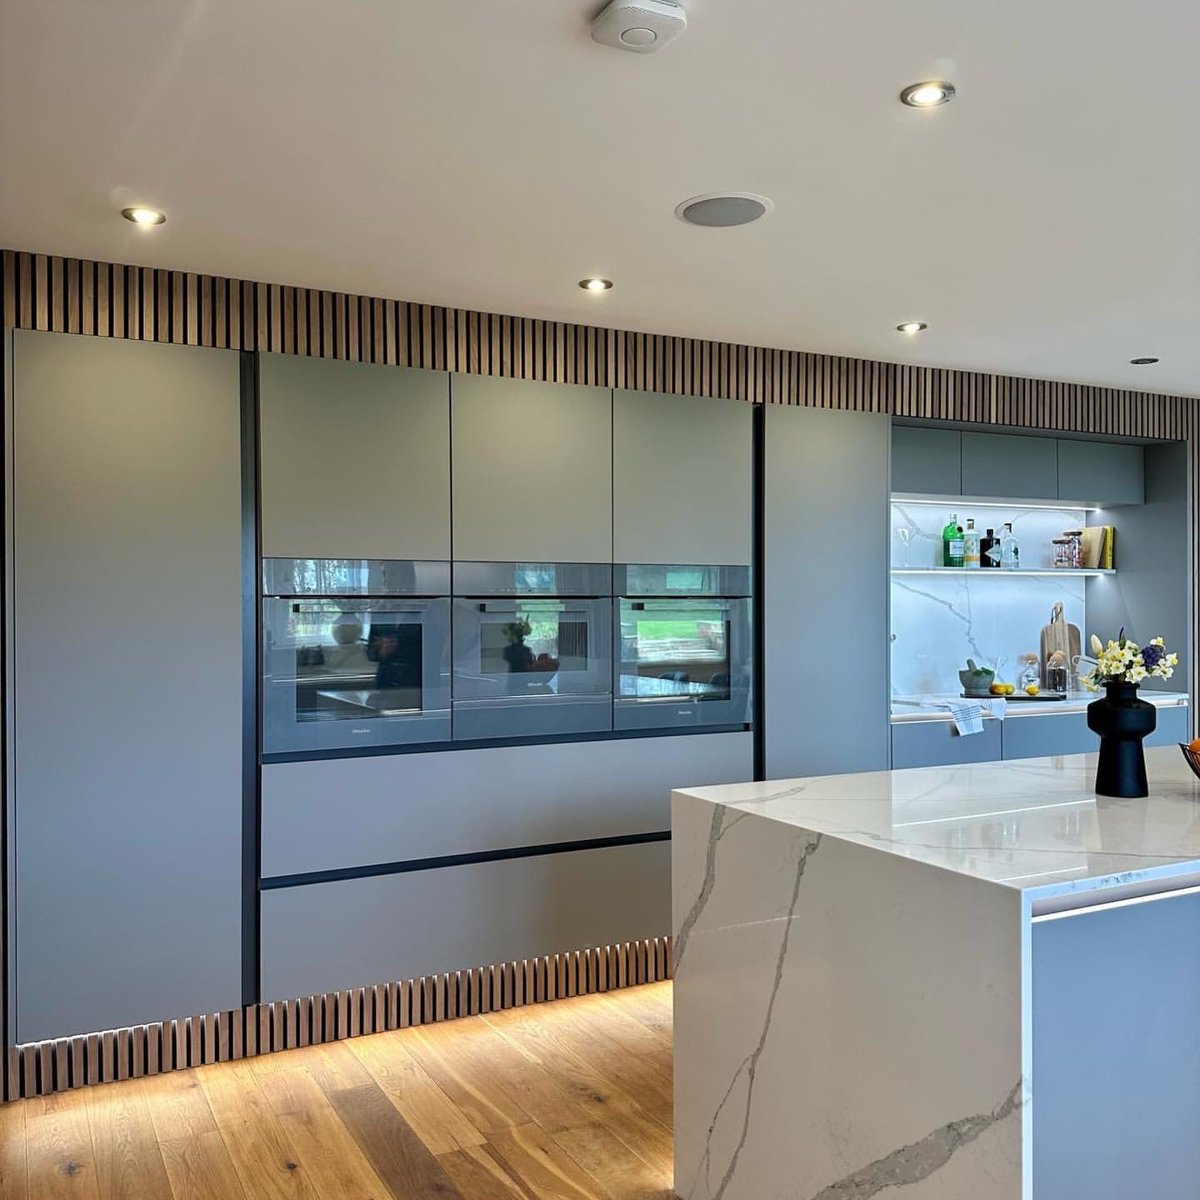 How stunning is this kitchen by Summer House Interiors using CRL Quartz Calacatta worktops?! Thanks for sharing!
.
#kitchenworktops #kitchencountertops #kitchenremodel